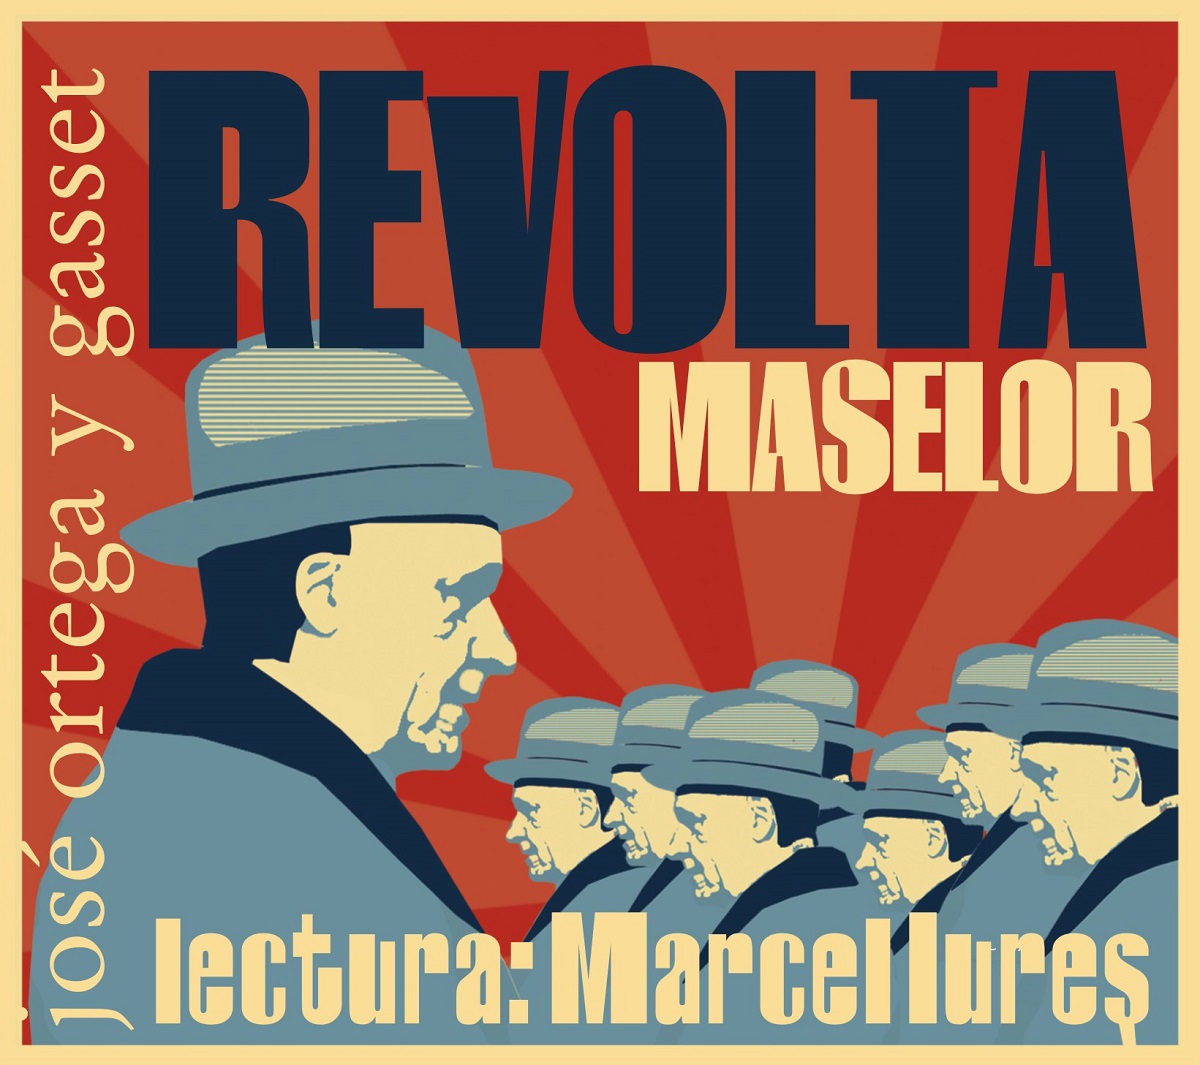 Audio Book Cd - Revolta maselor - Jose Ortega Y Gasset - Lectura:  Marcel Iures